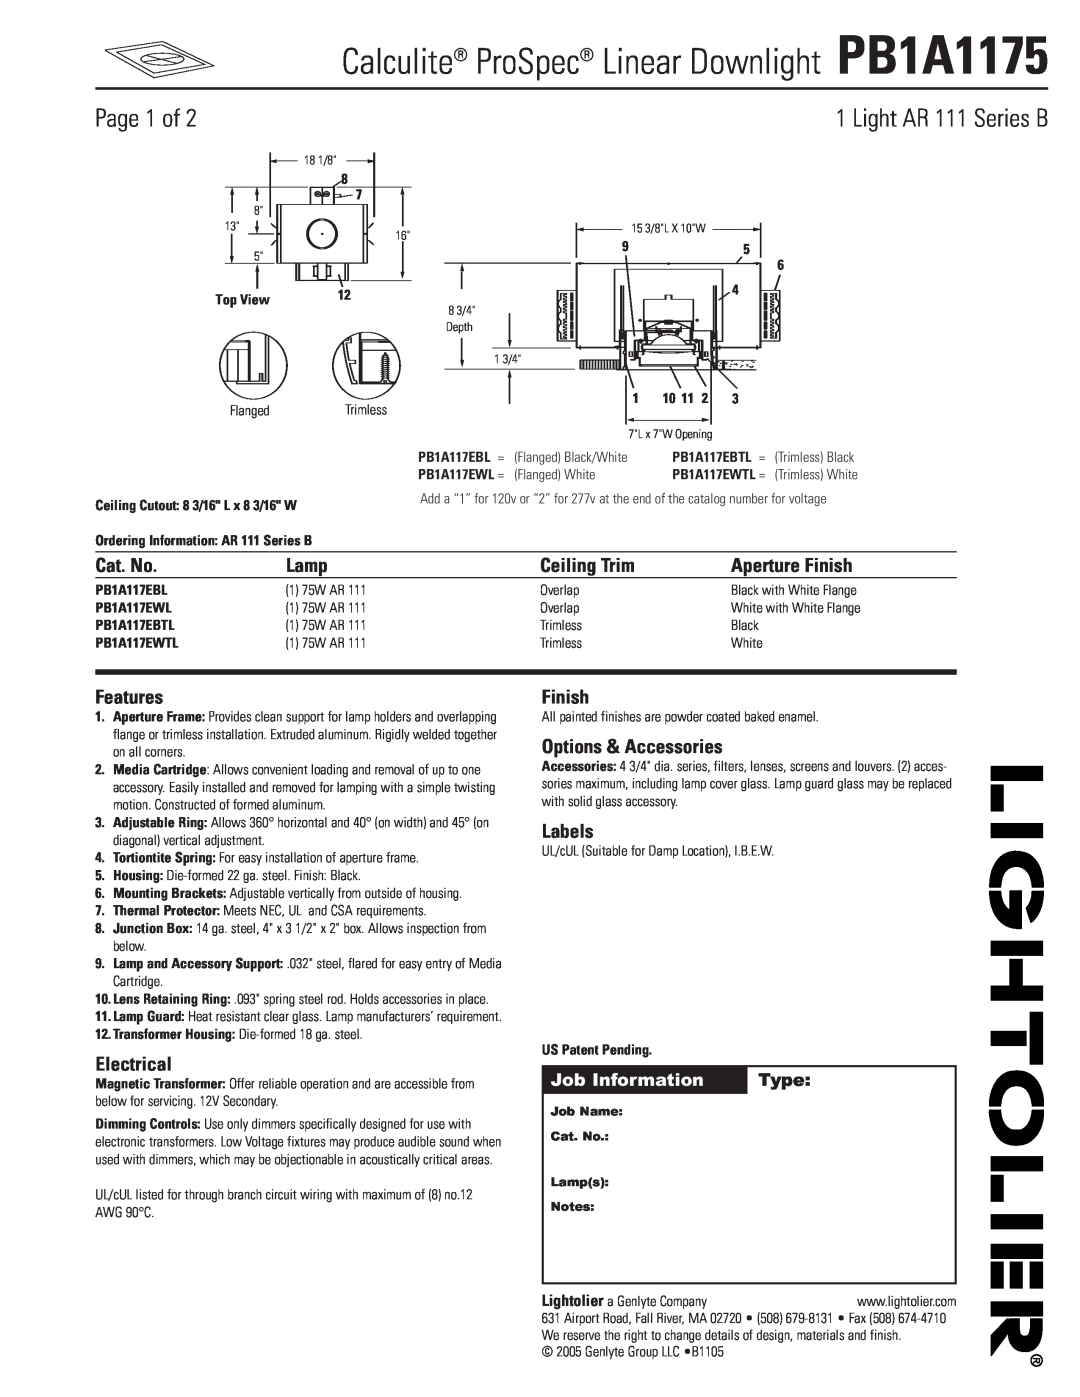 Lightolier manual Calculite ProSpec Linear Downlight PB1A1175, Page 1 of, Light AR 111 Series B, Type, Job Information 